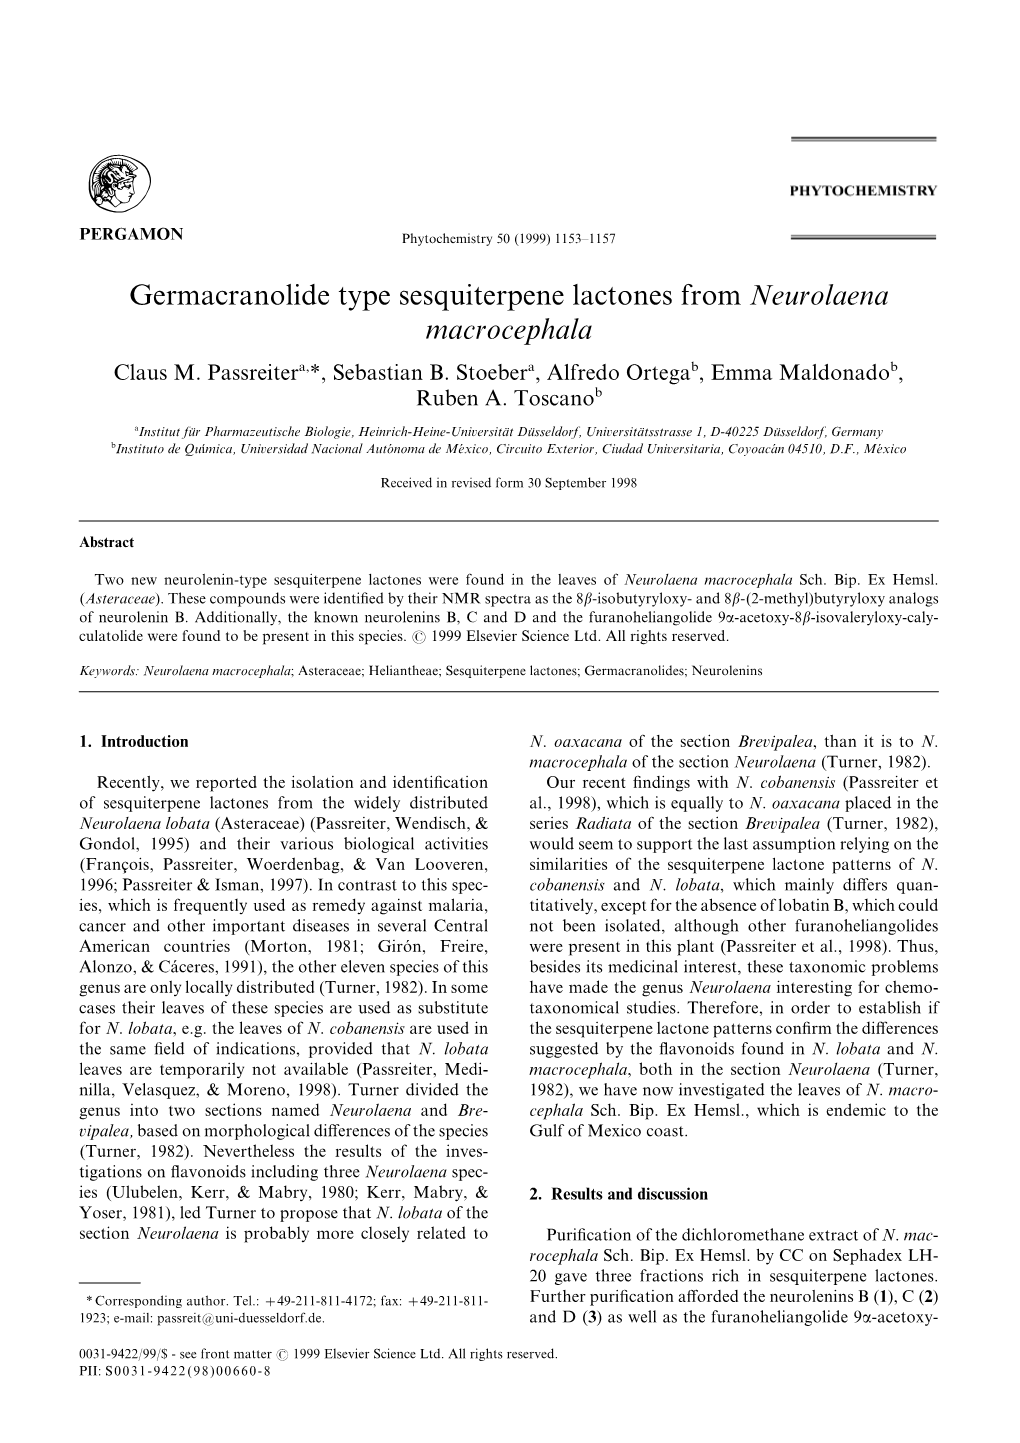 Germacranolide Type Sesquiterpene Lactones from Neurolaena Macrocephala